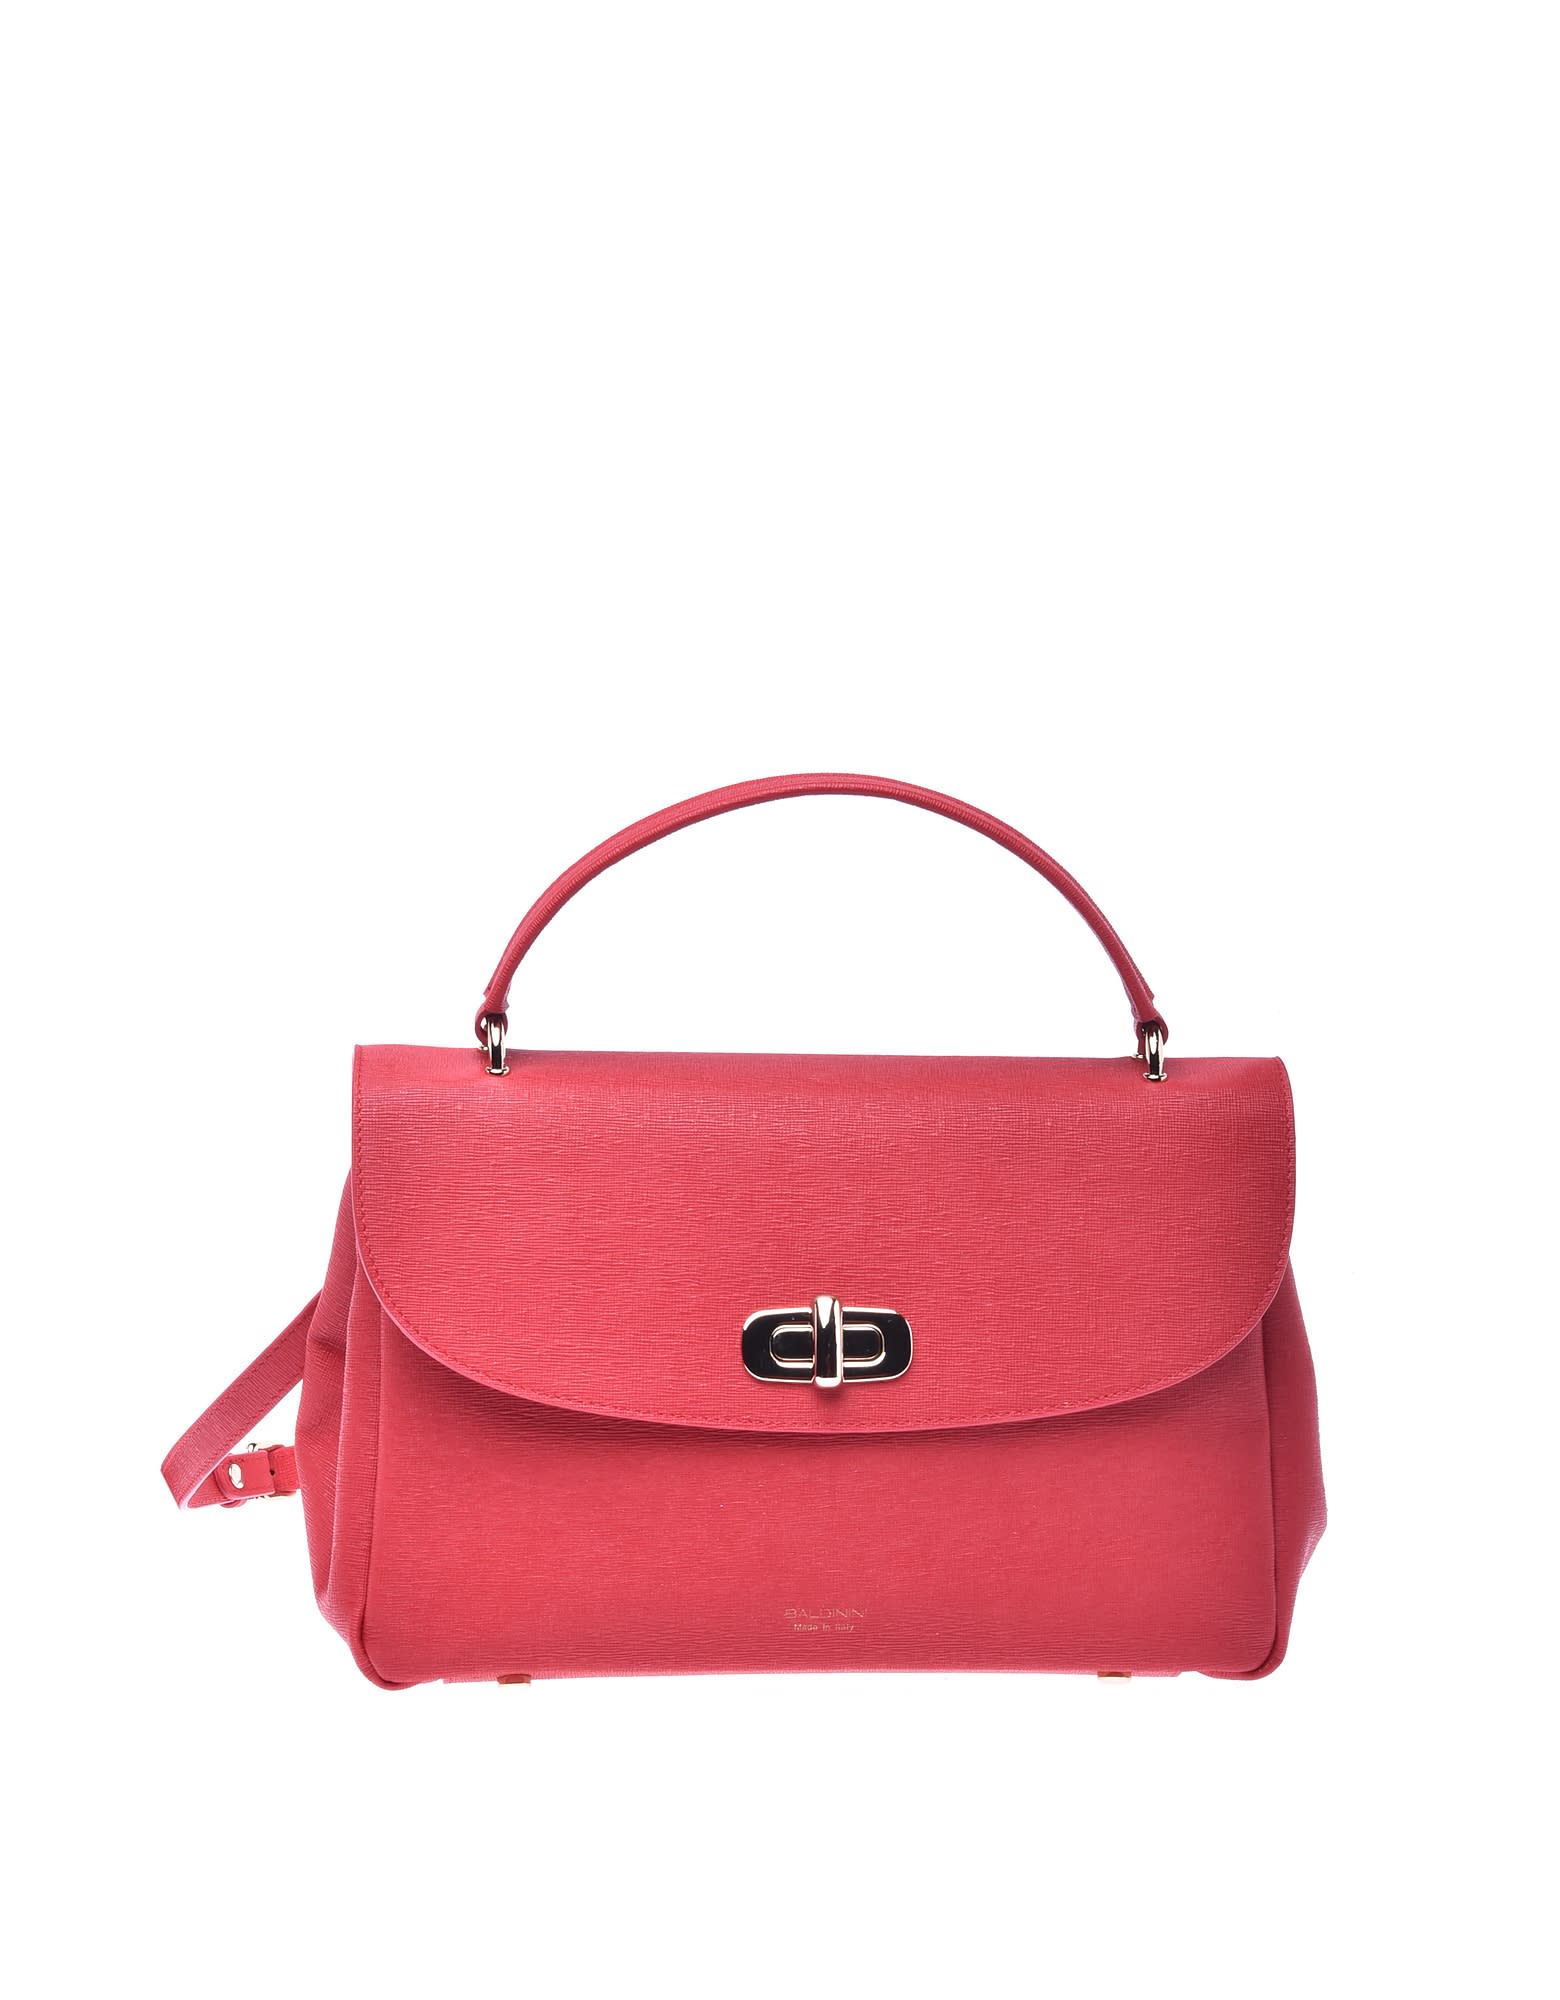 Baldinini Red Leather Shoulder Bag